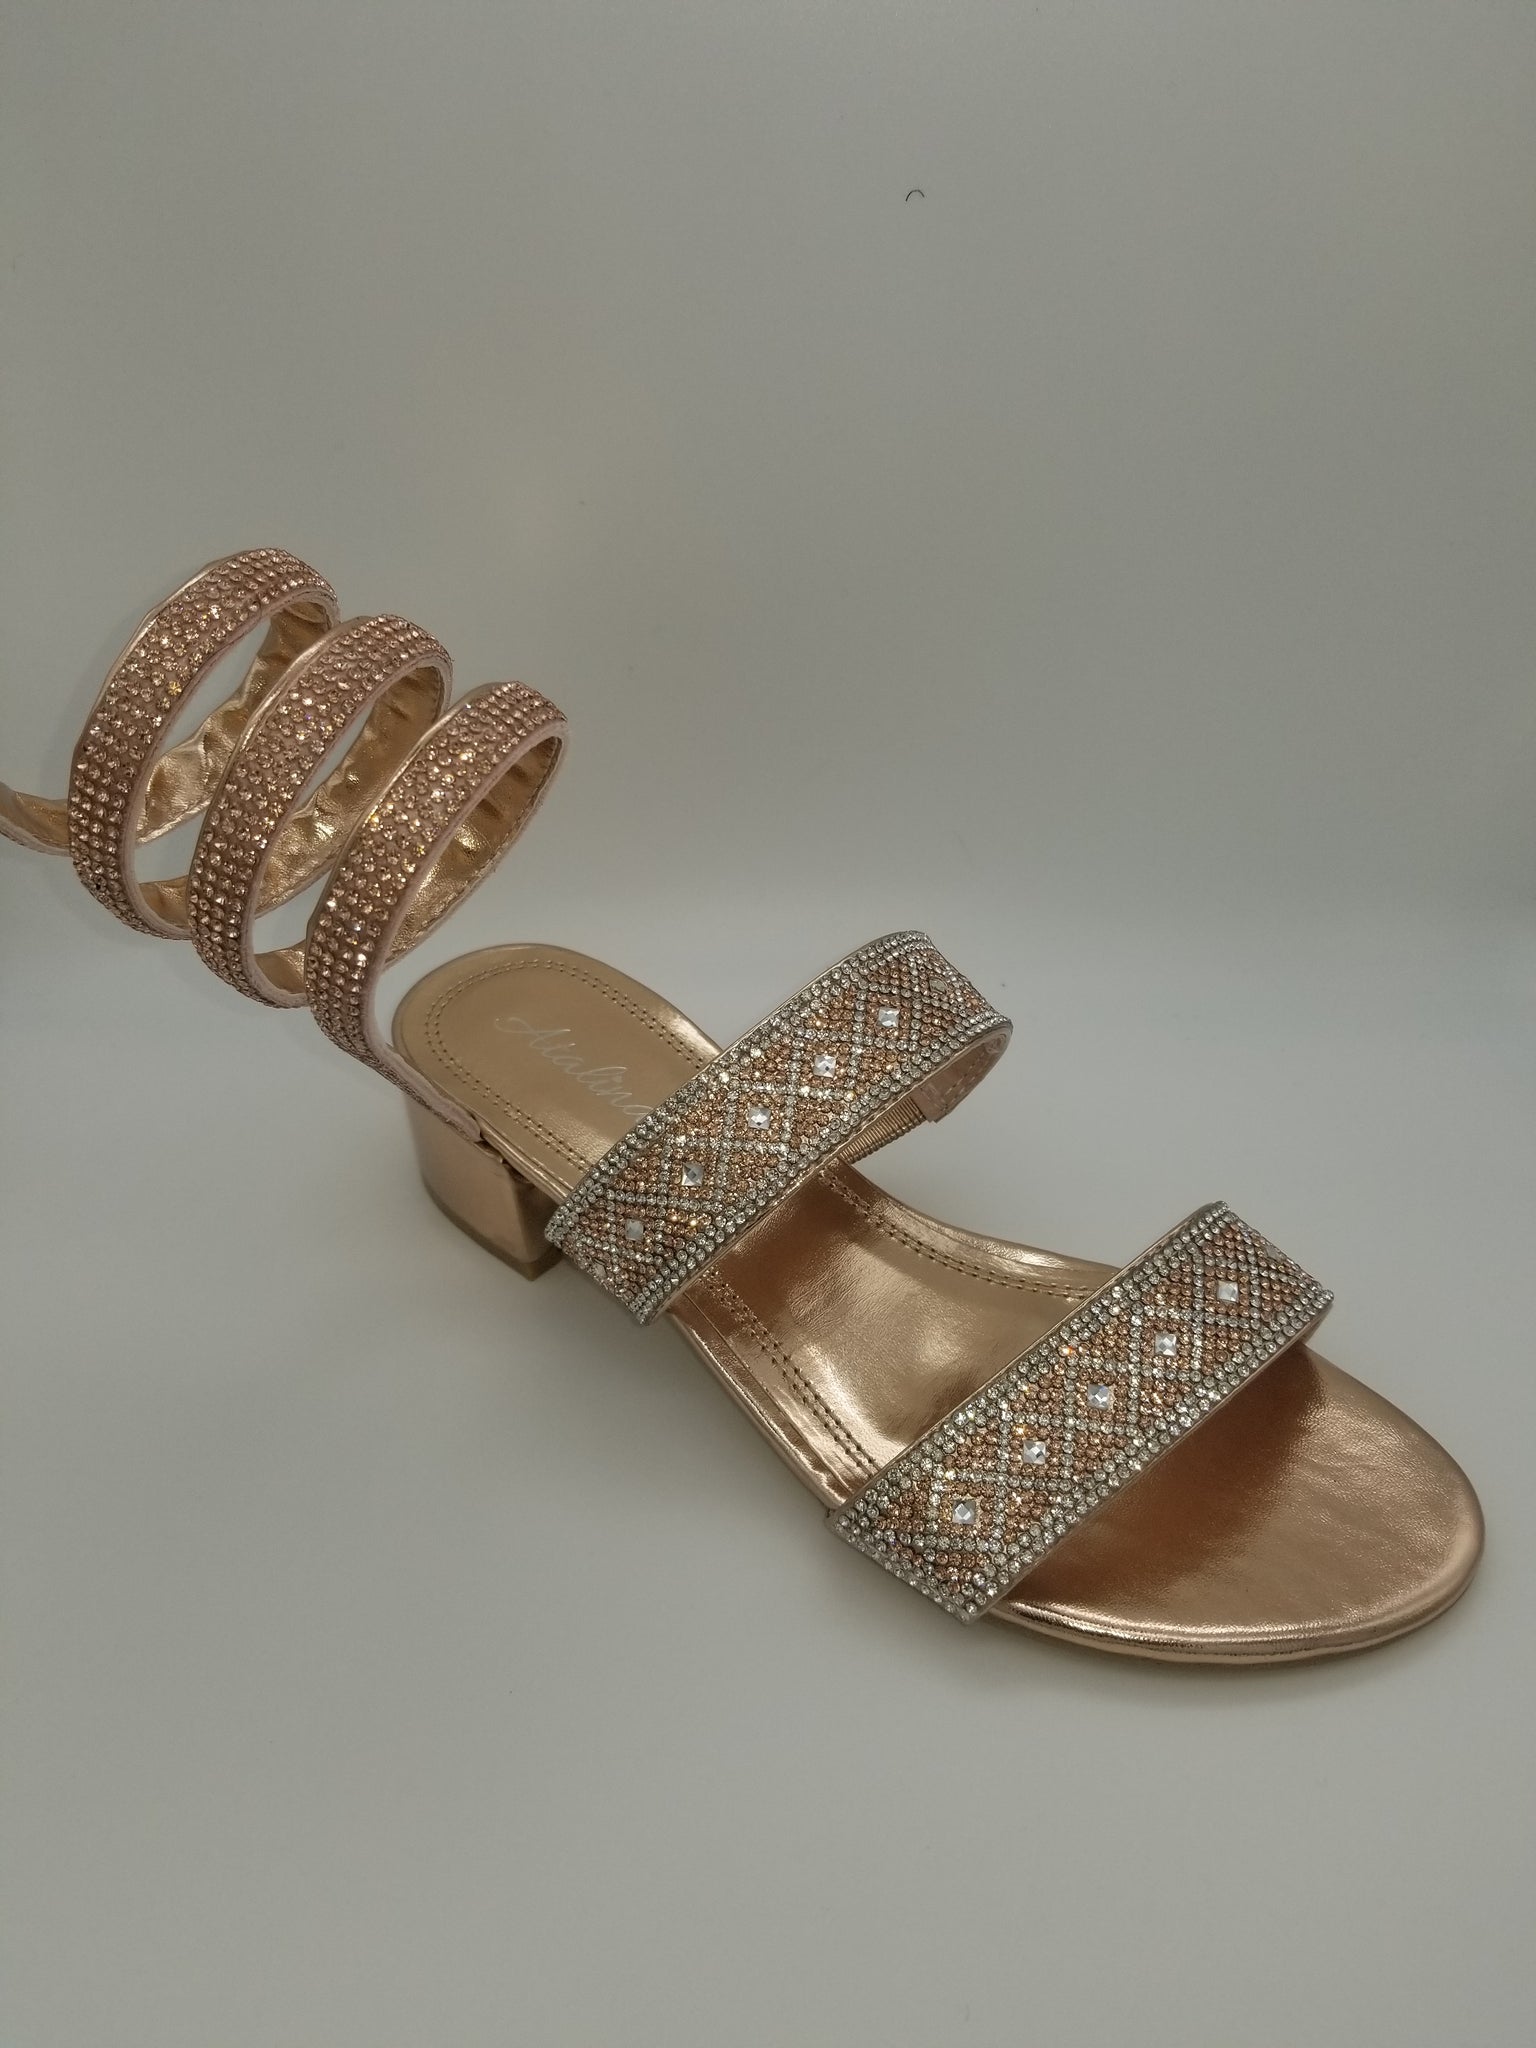 Atalina Sandals - Amethyst Shoes